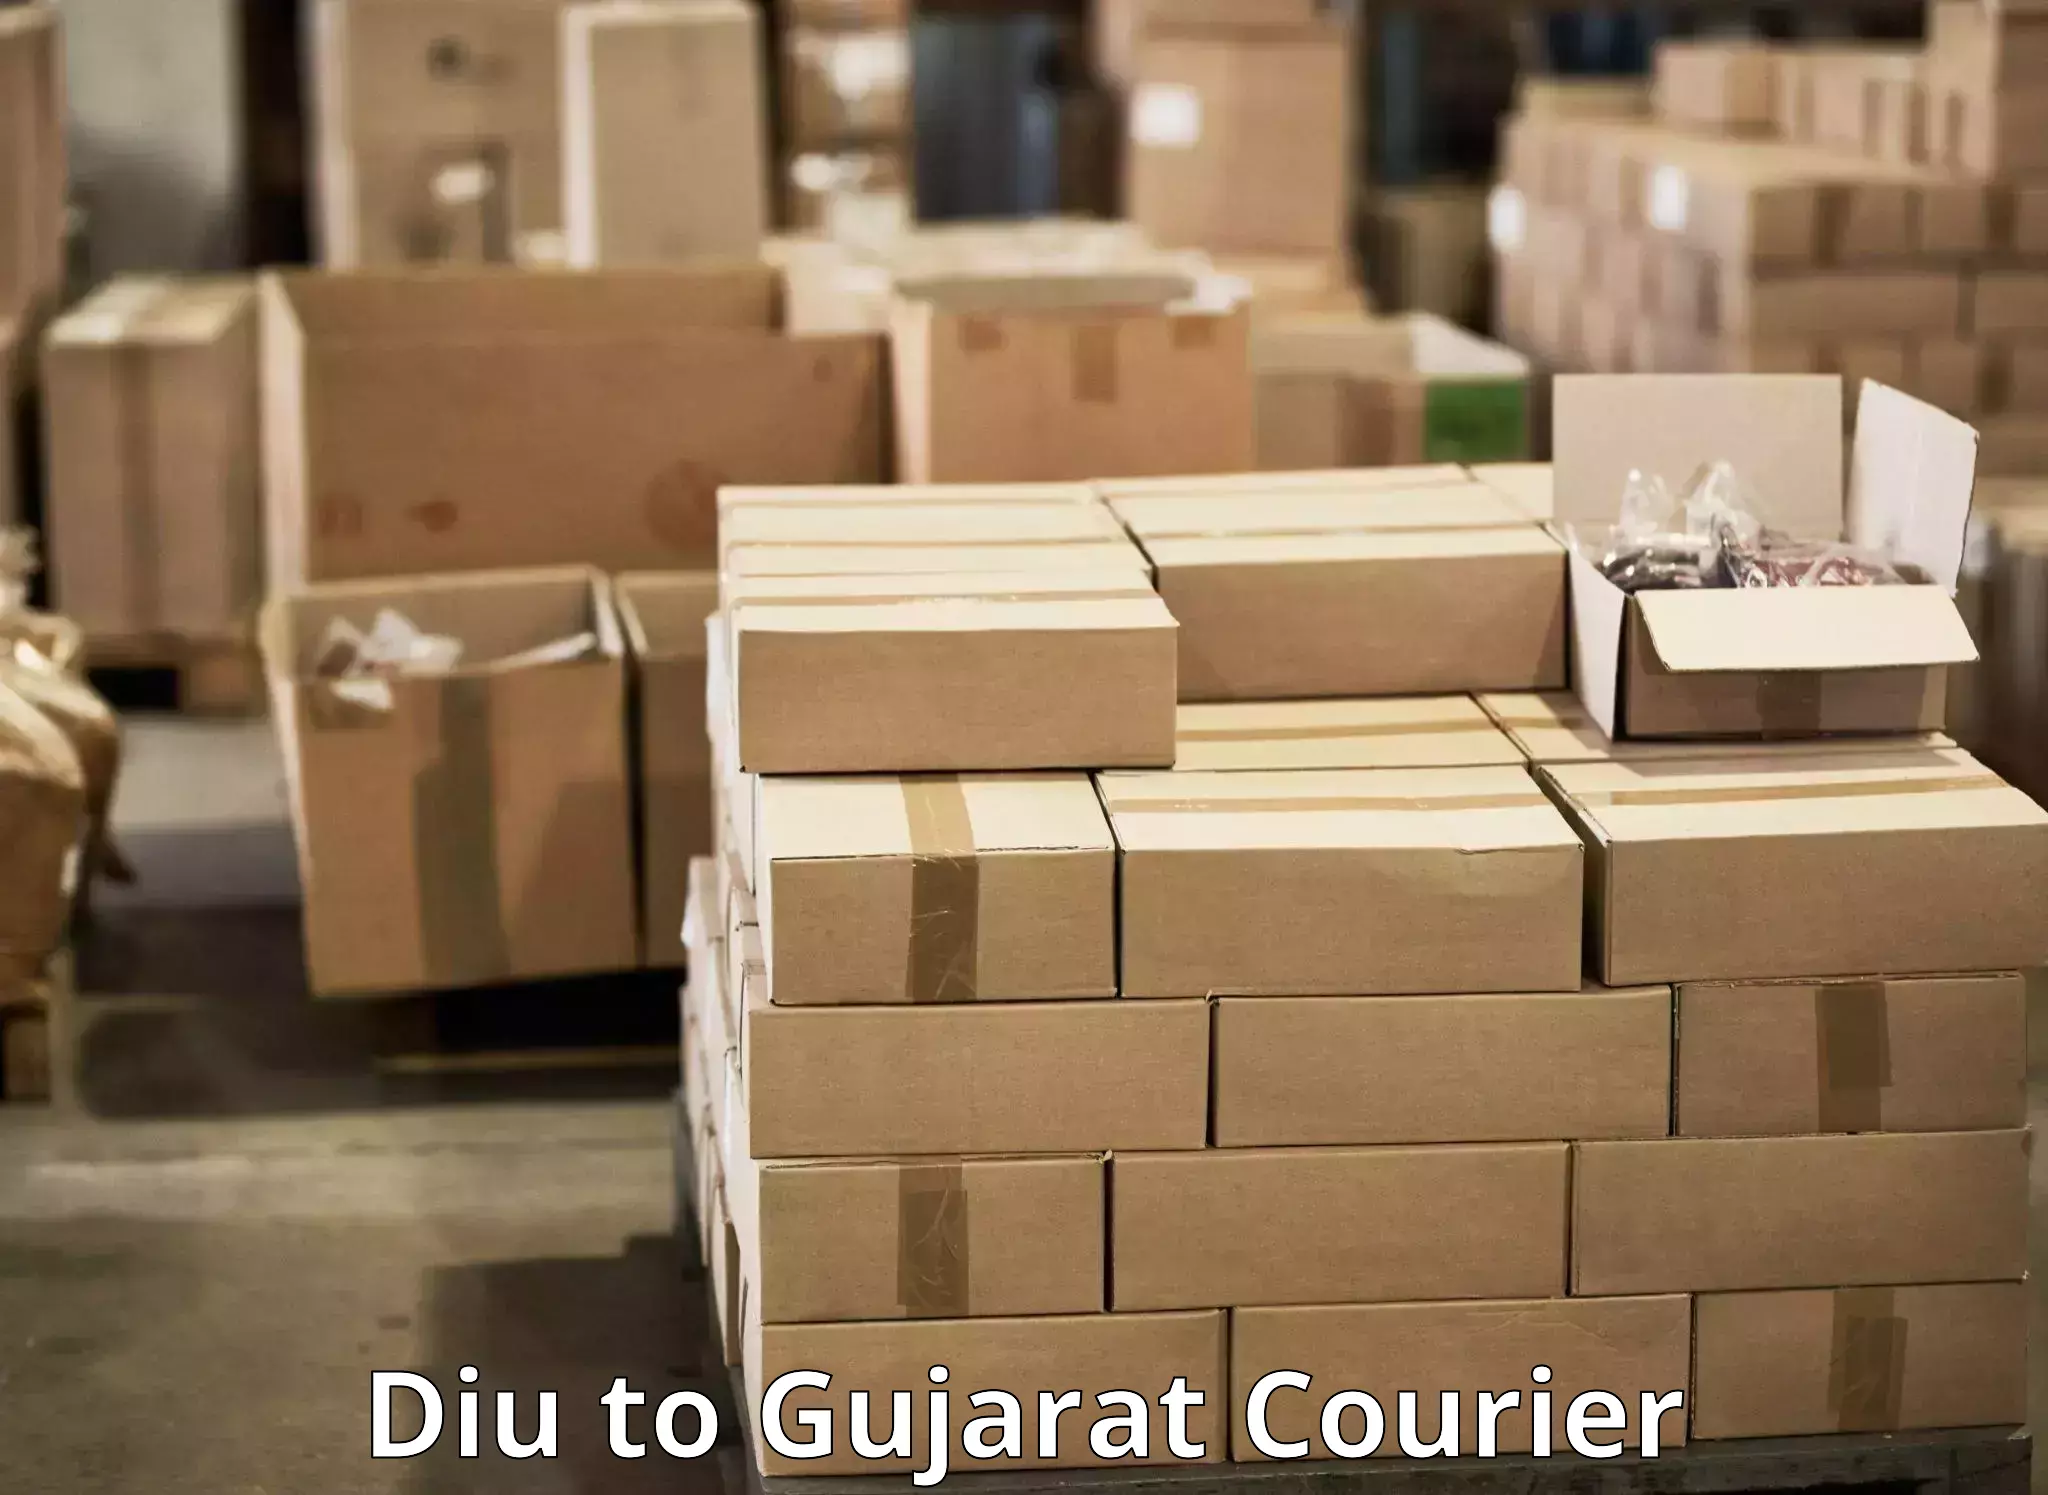 Courier service comparison Diu to Banaskantha